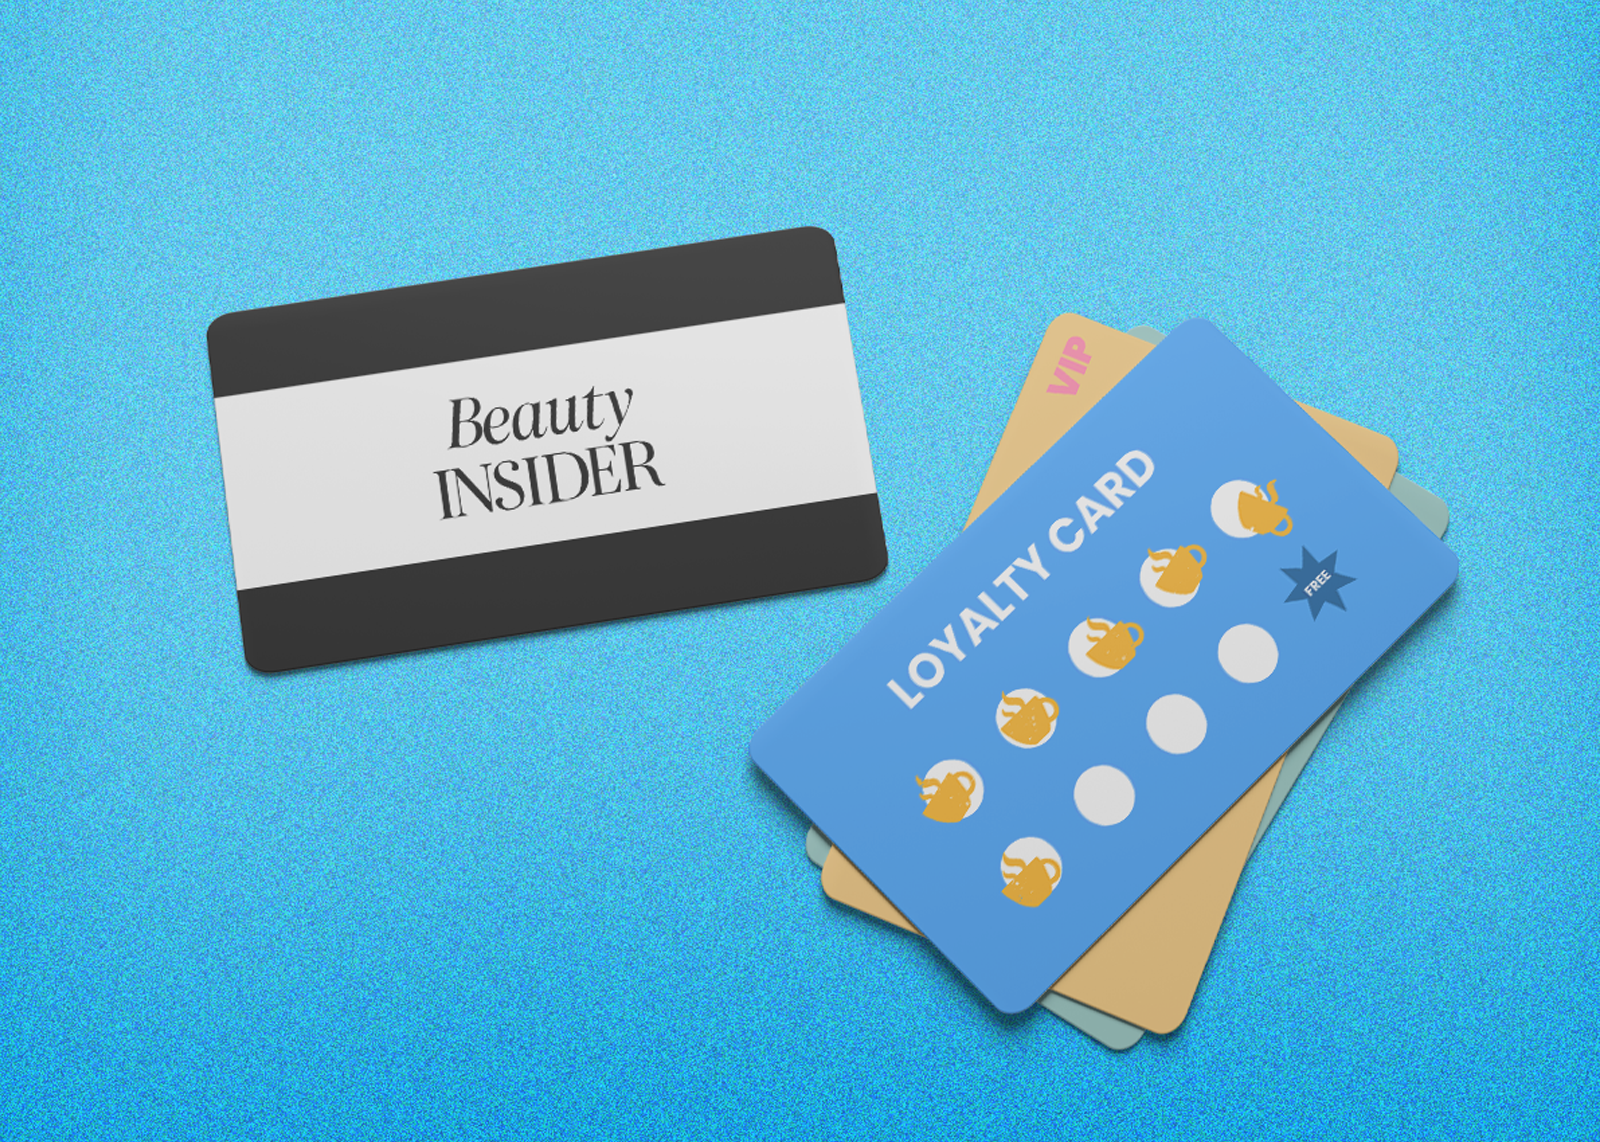 beauty insider loyalty rewards card next to loyalty card